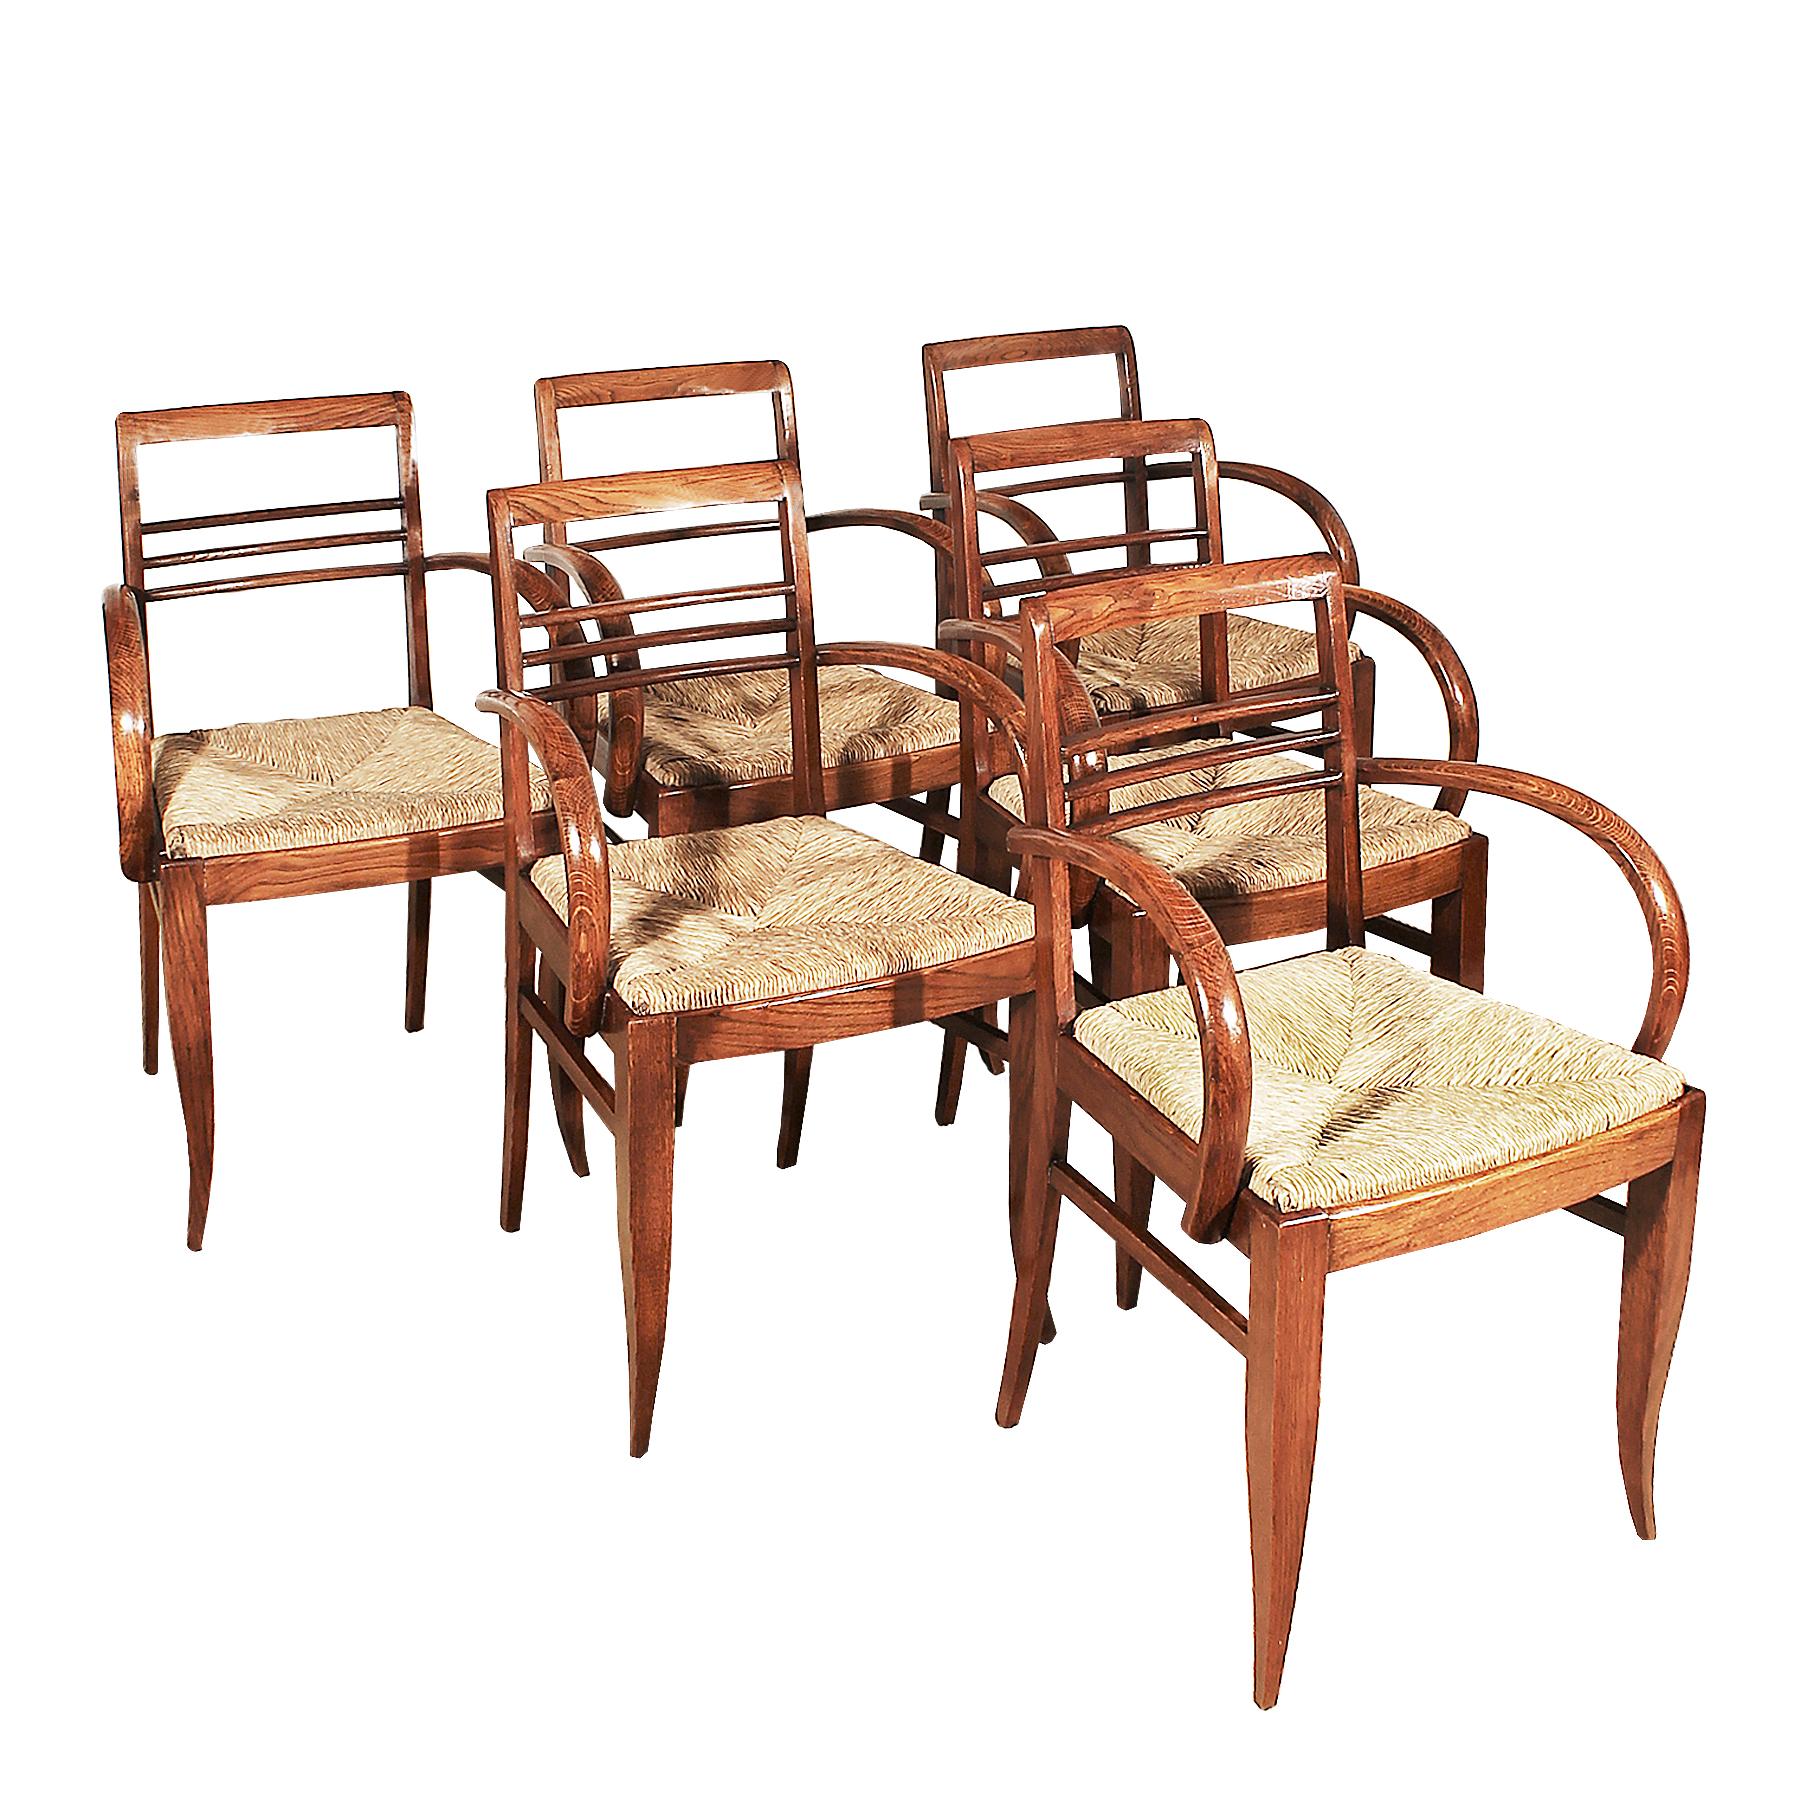 Set of six Art Deco small bridge armchairs, solid oakwood, French polish, original woven straw seat.
France, 1935-1940.